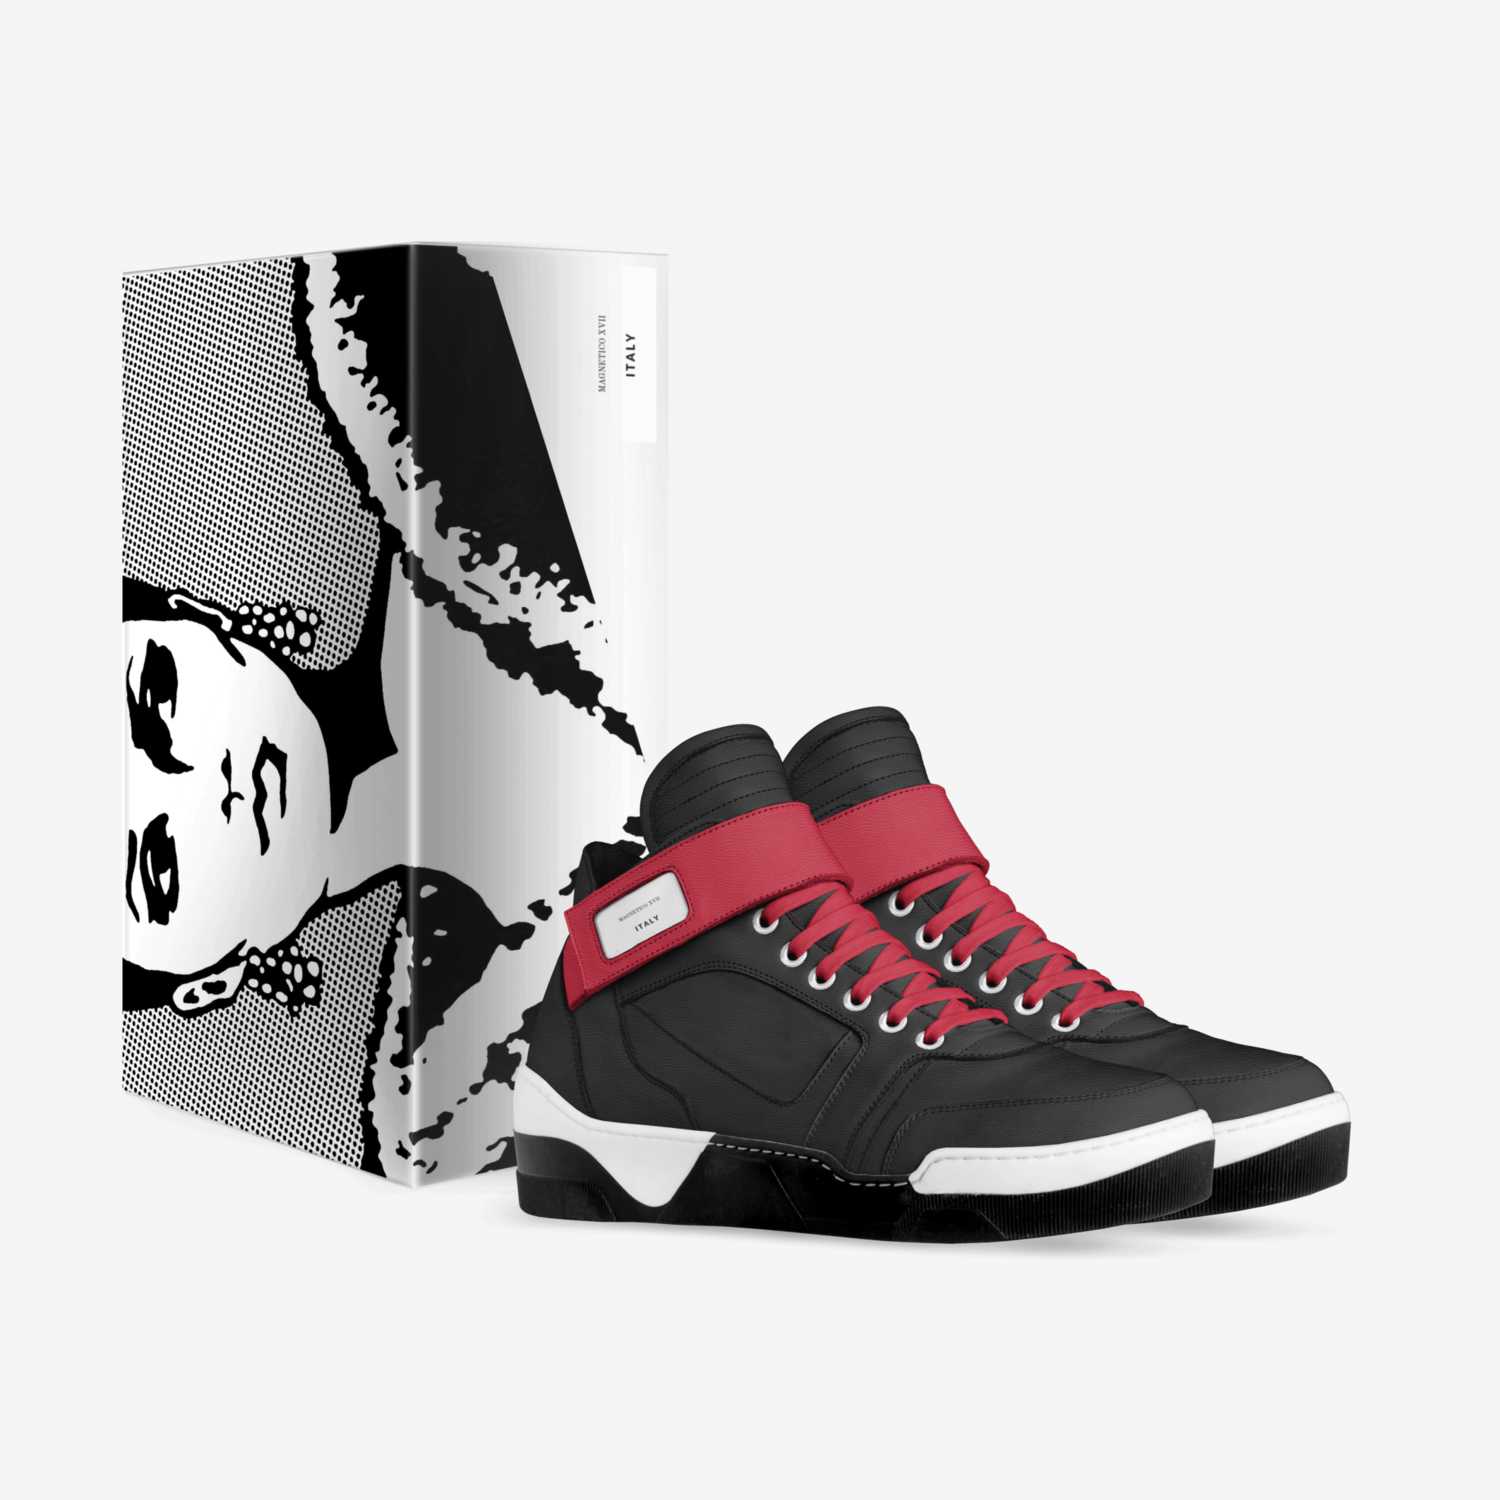 MAGNETICO XVII POR custom made in Italy shoes by Jesús Sandoval | Box view